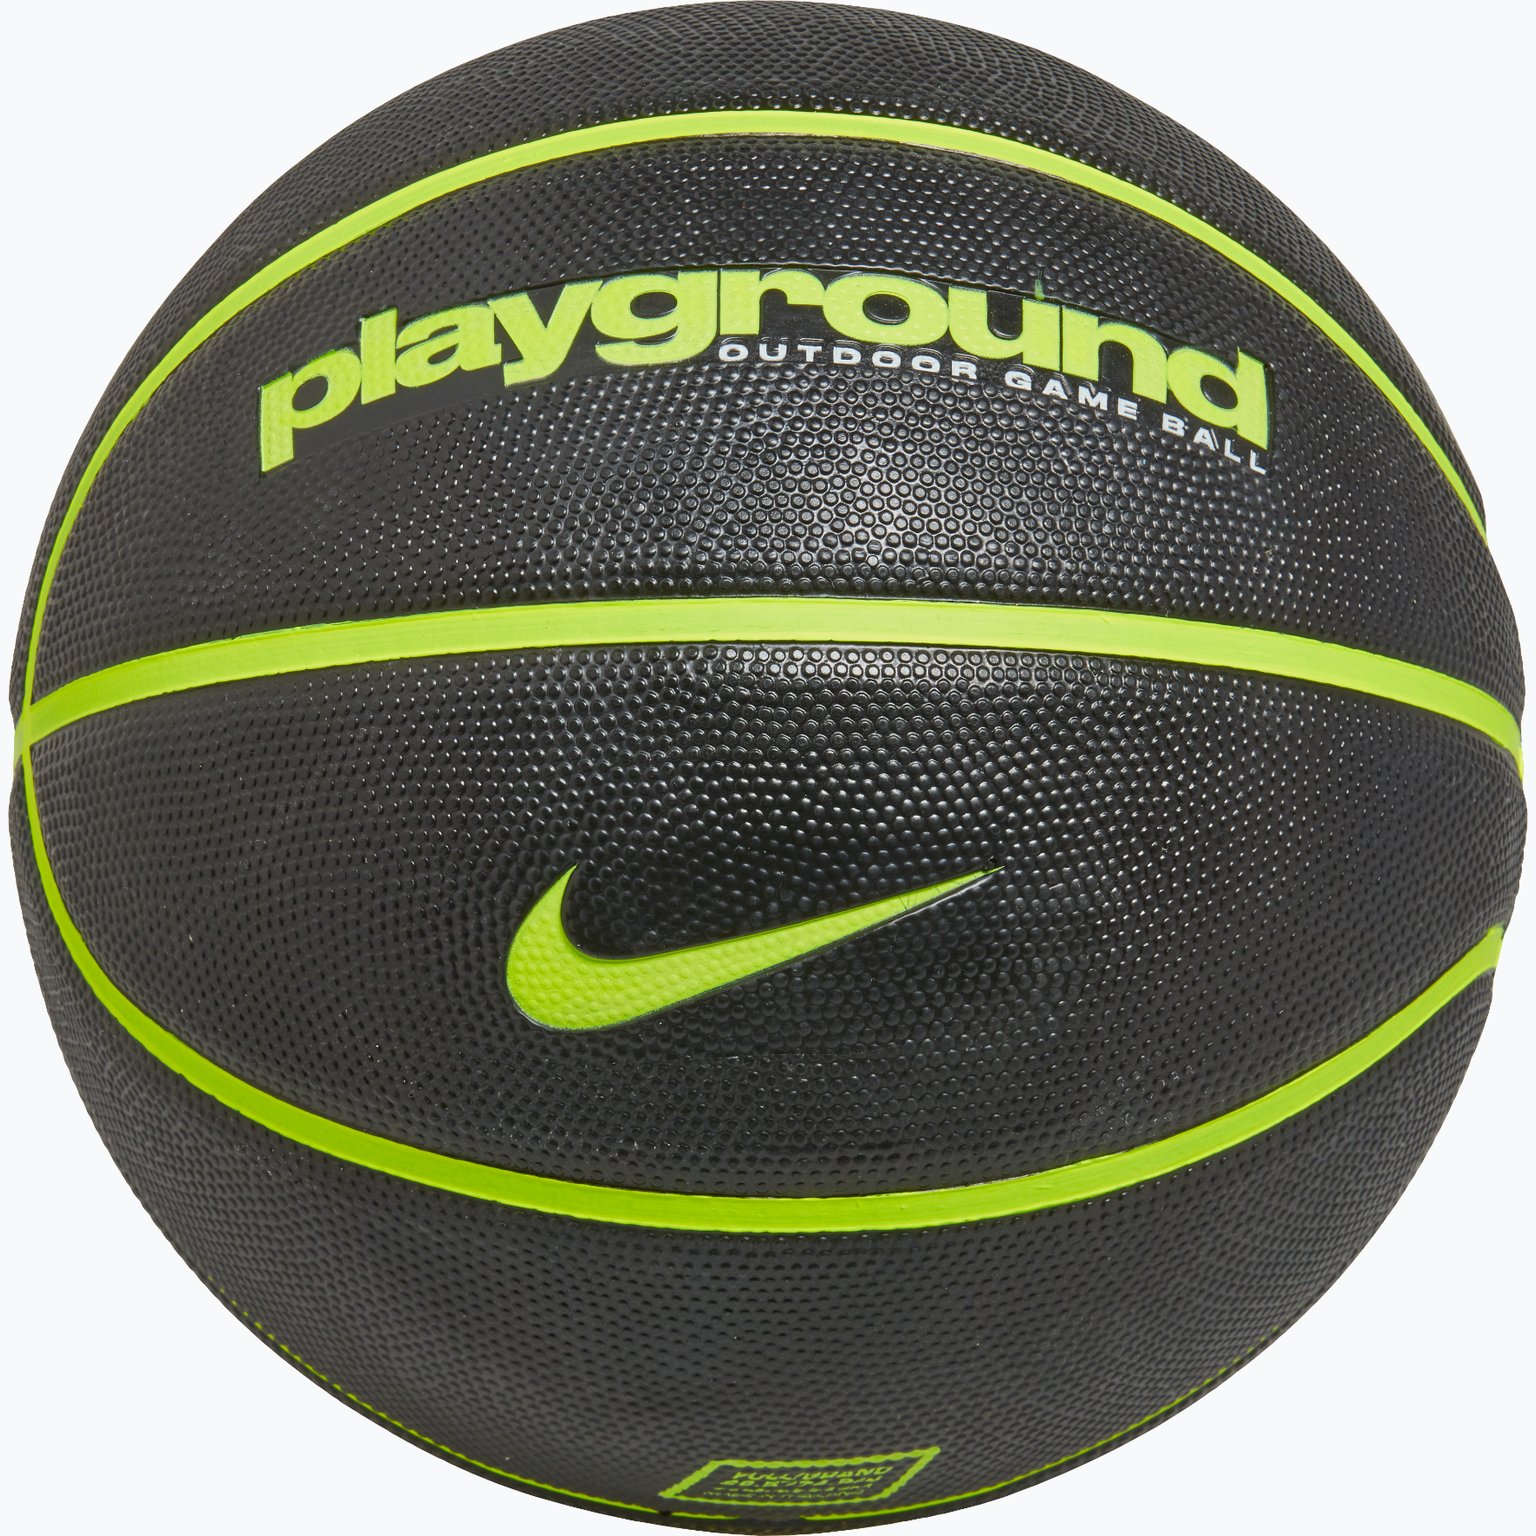 Everyday Playground 8P Deflated basketboll